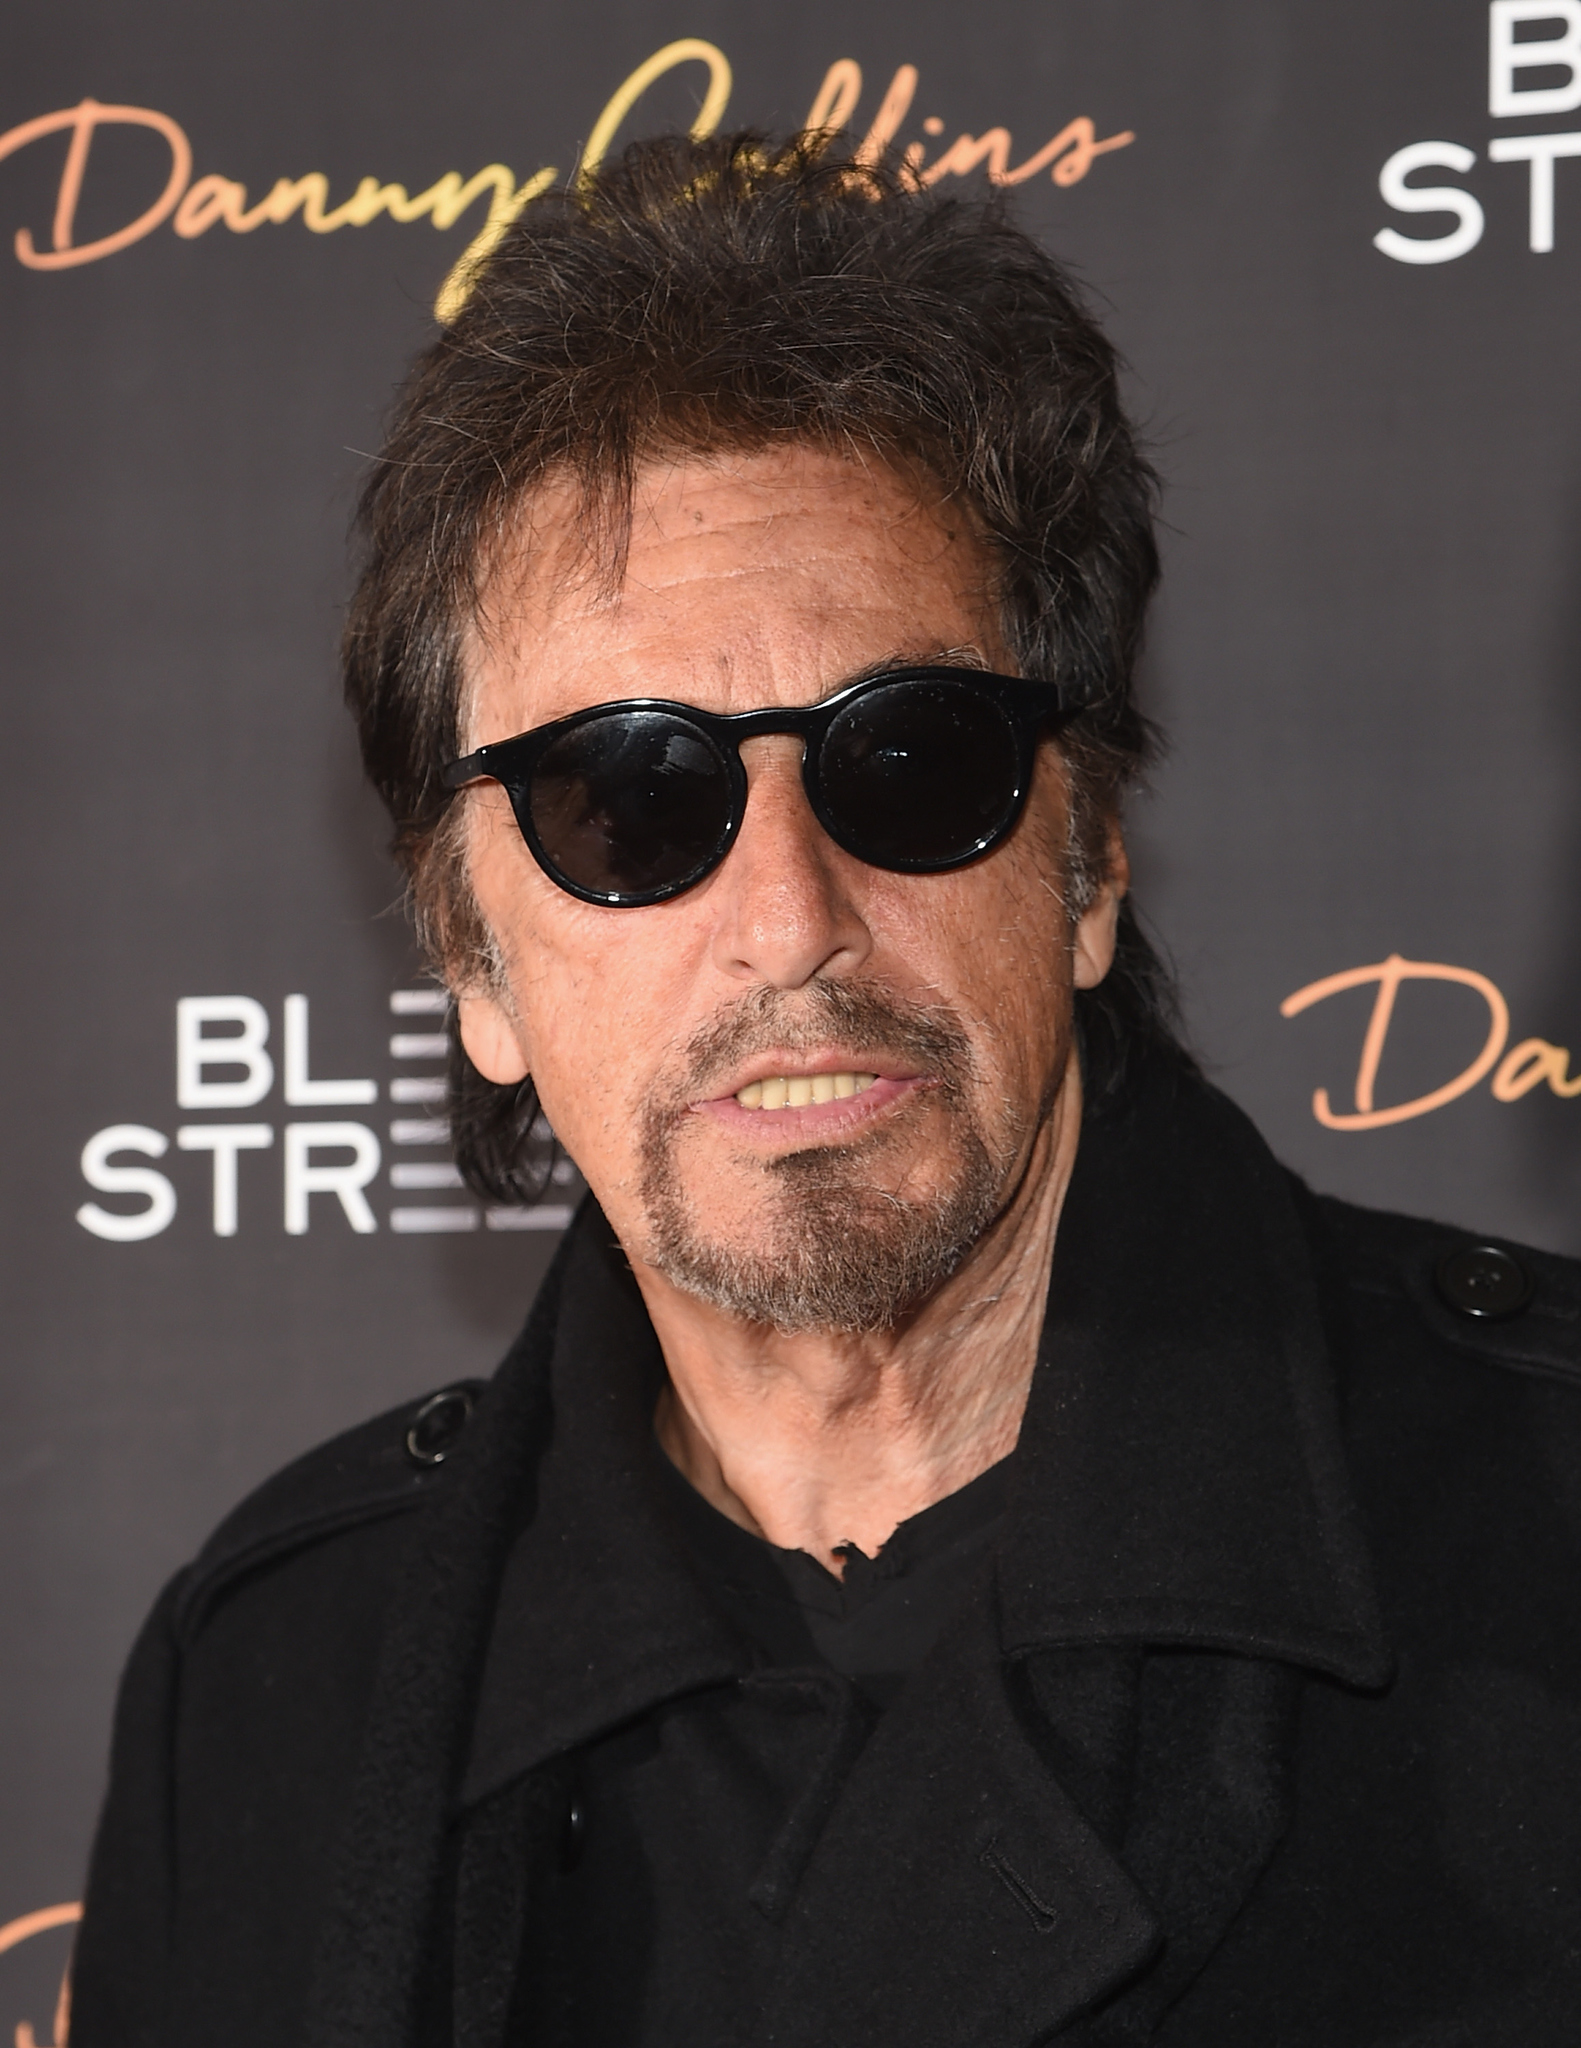 Al Pacino at event of Denis Kolinsas (2015)